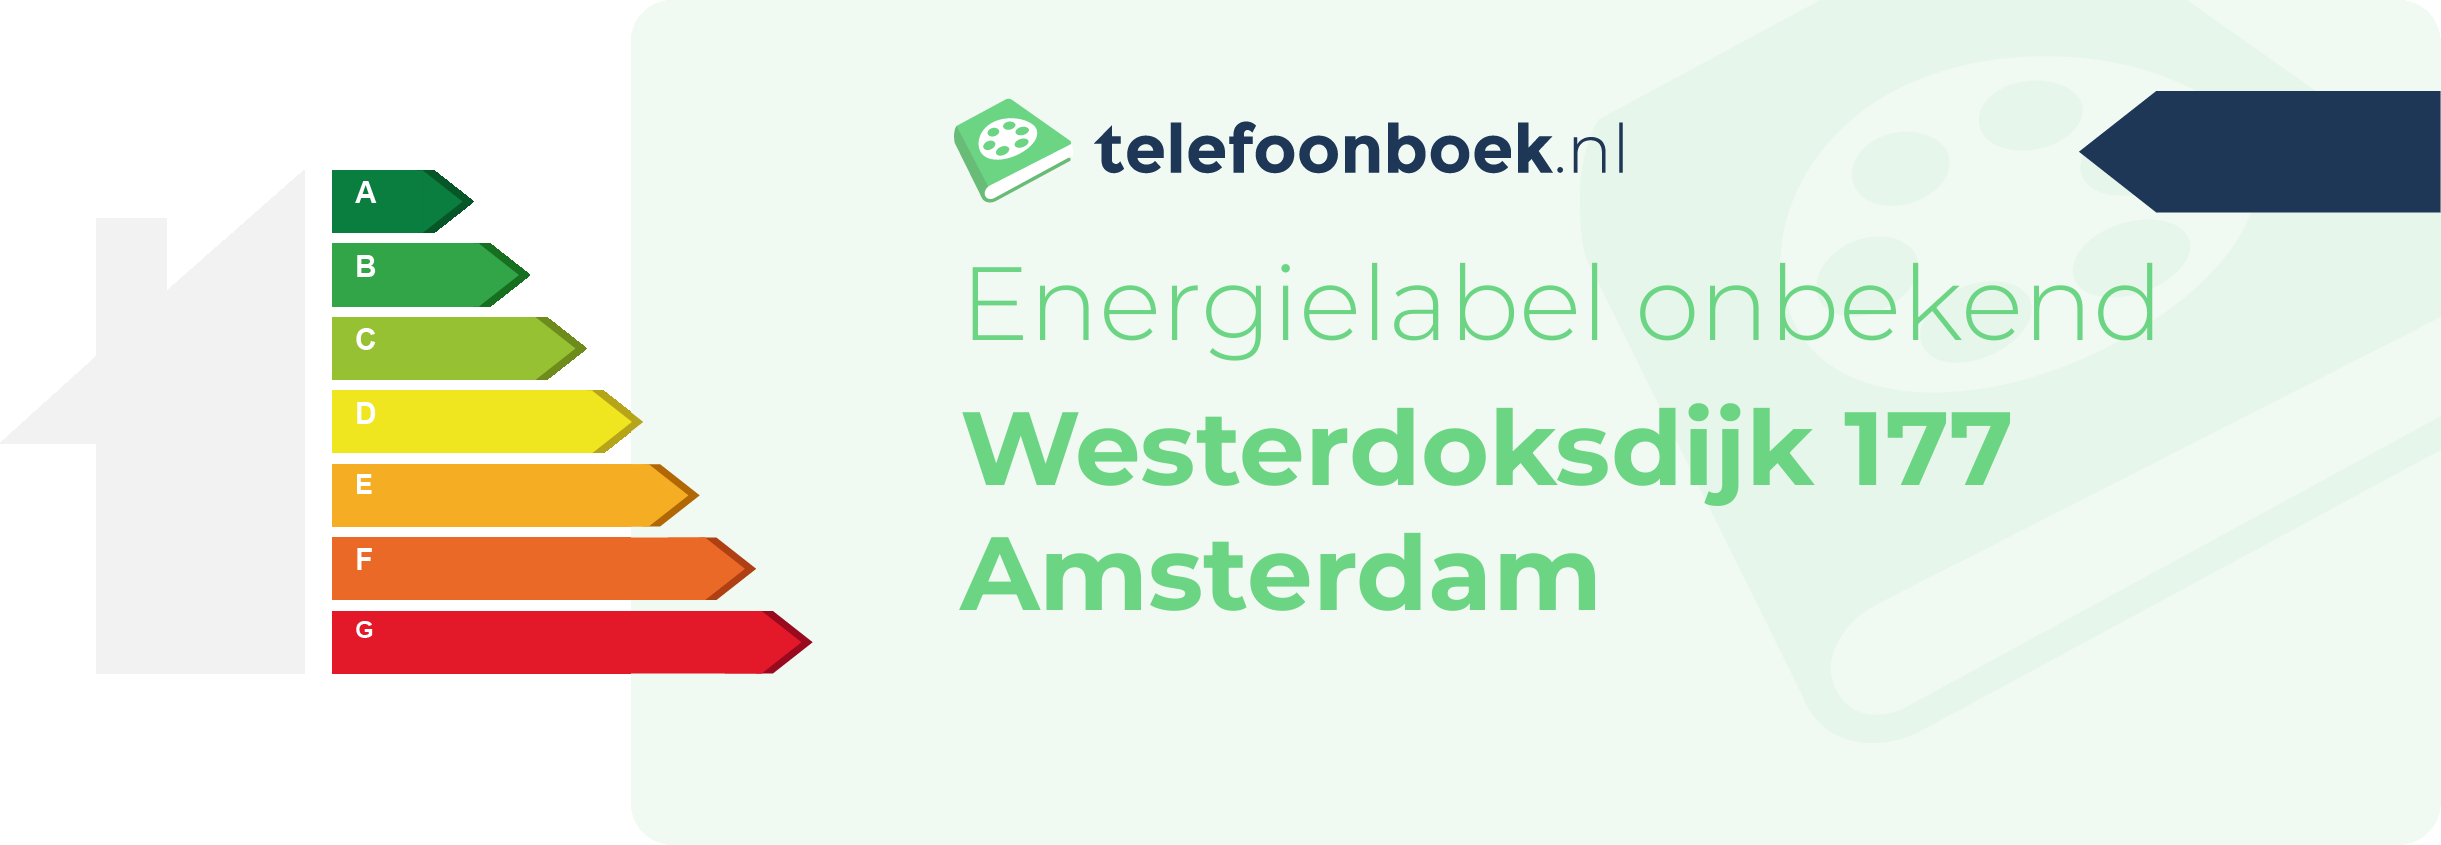 Energielabel Westerdoksdijk 177 Amsterdam